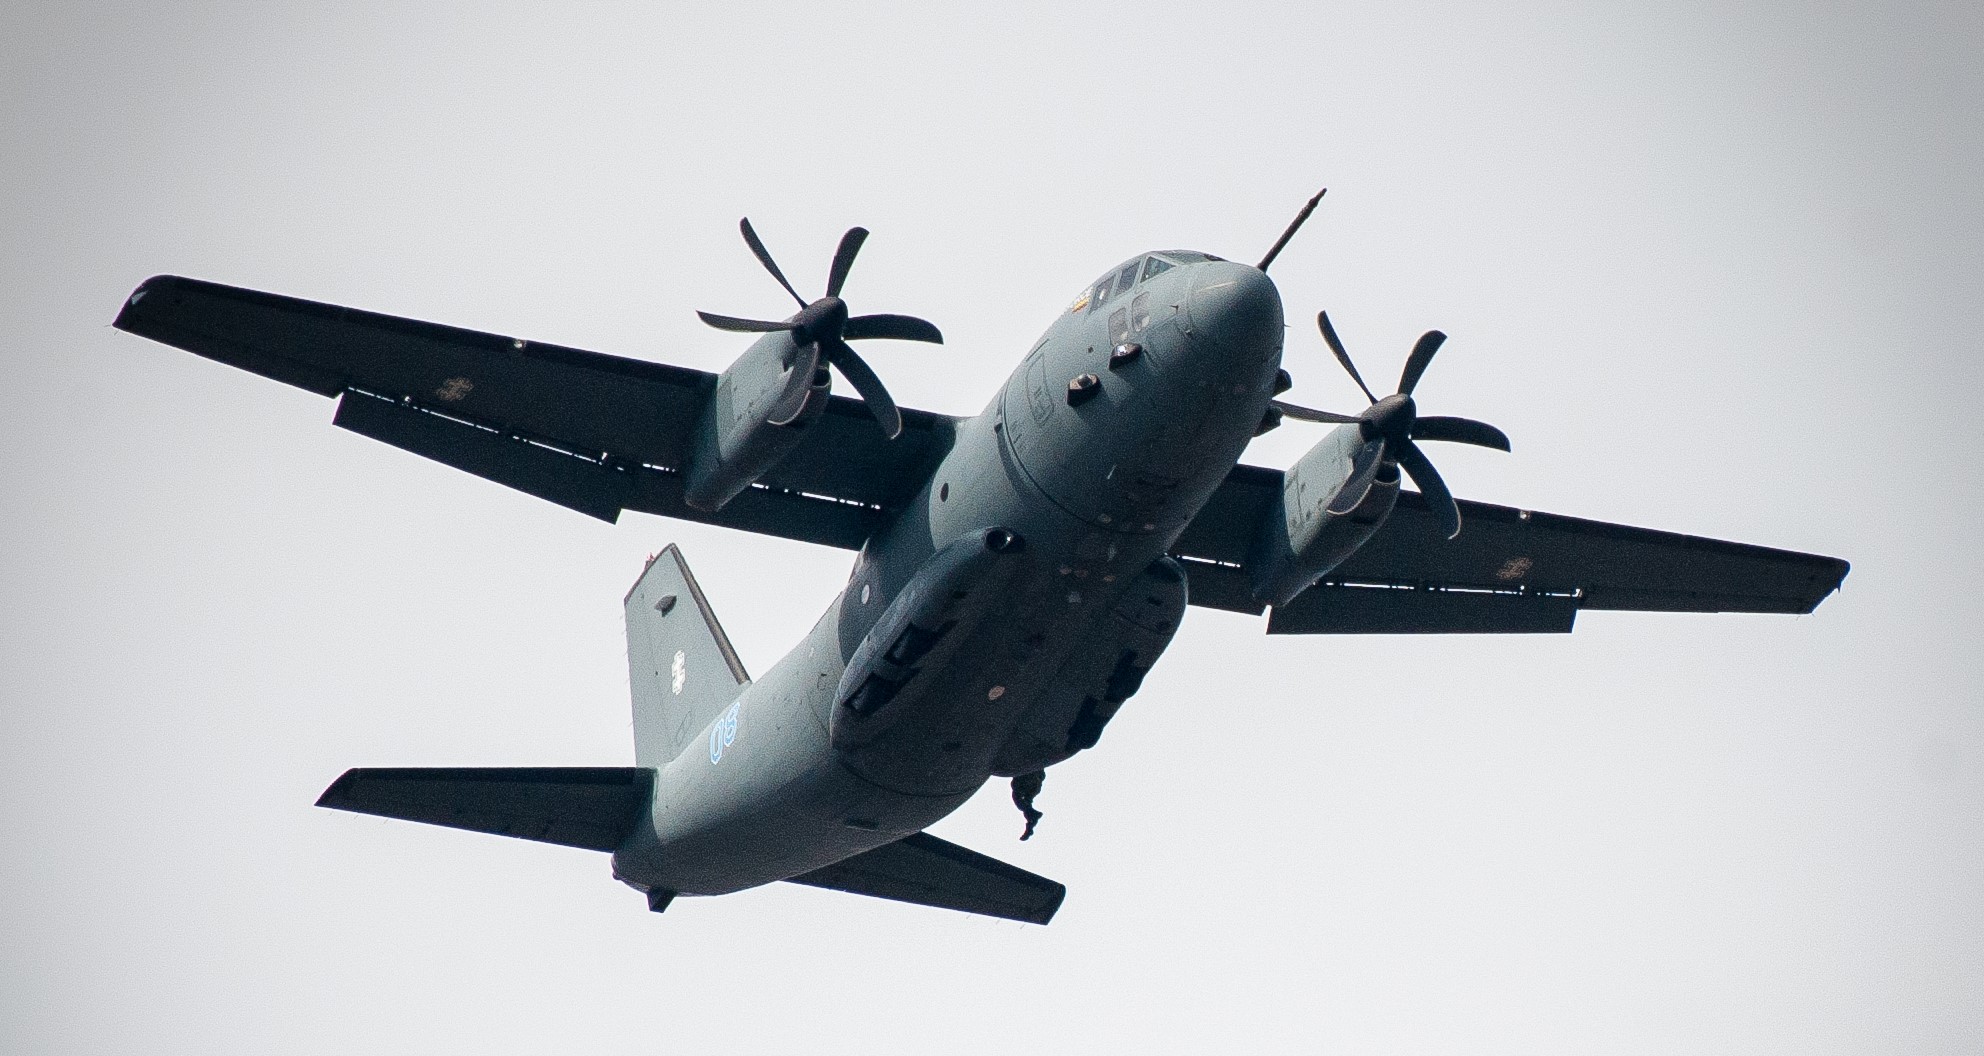 SPARTAN exercise underway to boost C-27J interoperability